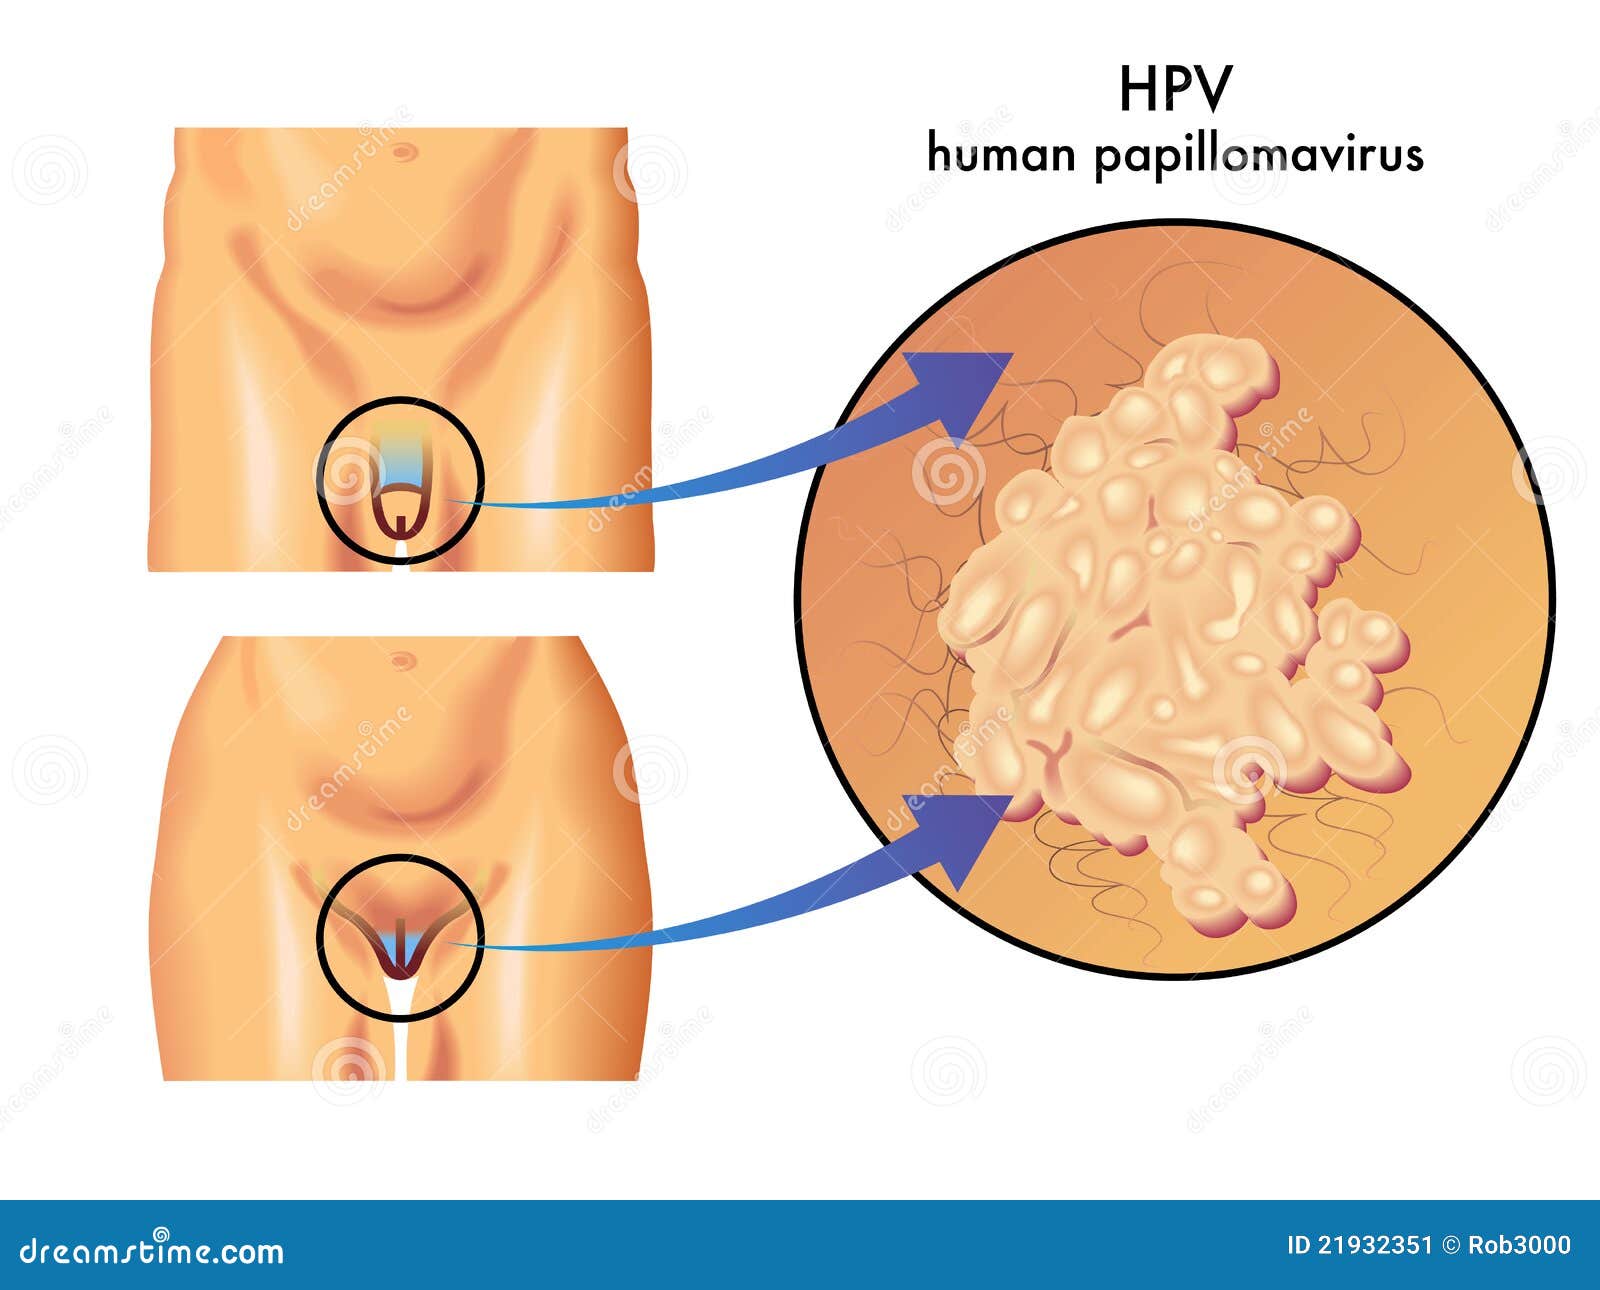 hpv causes disease